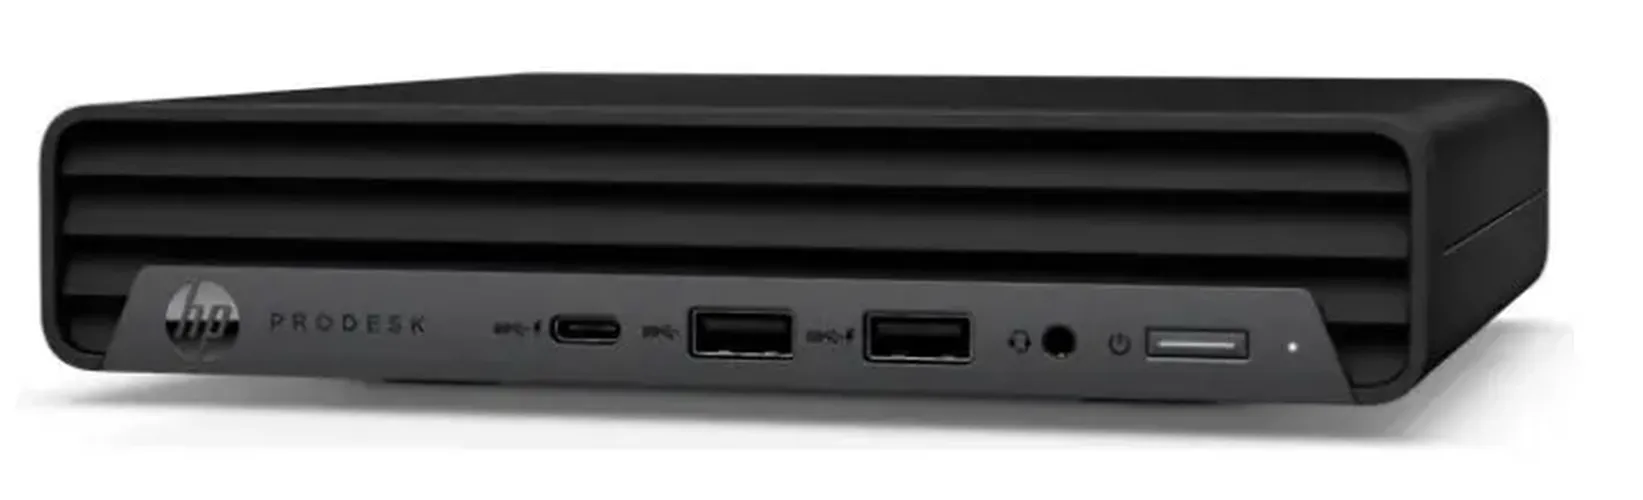 Мини ПК HP Pro Deck 400 G9|  i5-12 Gen| 8Gb DDR4| SSD 256Gb| PSU, Черный, фото